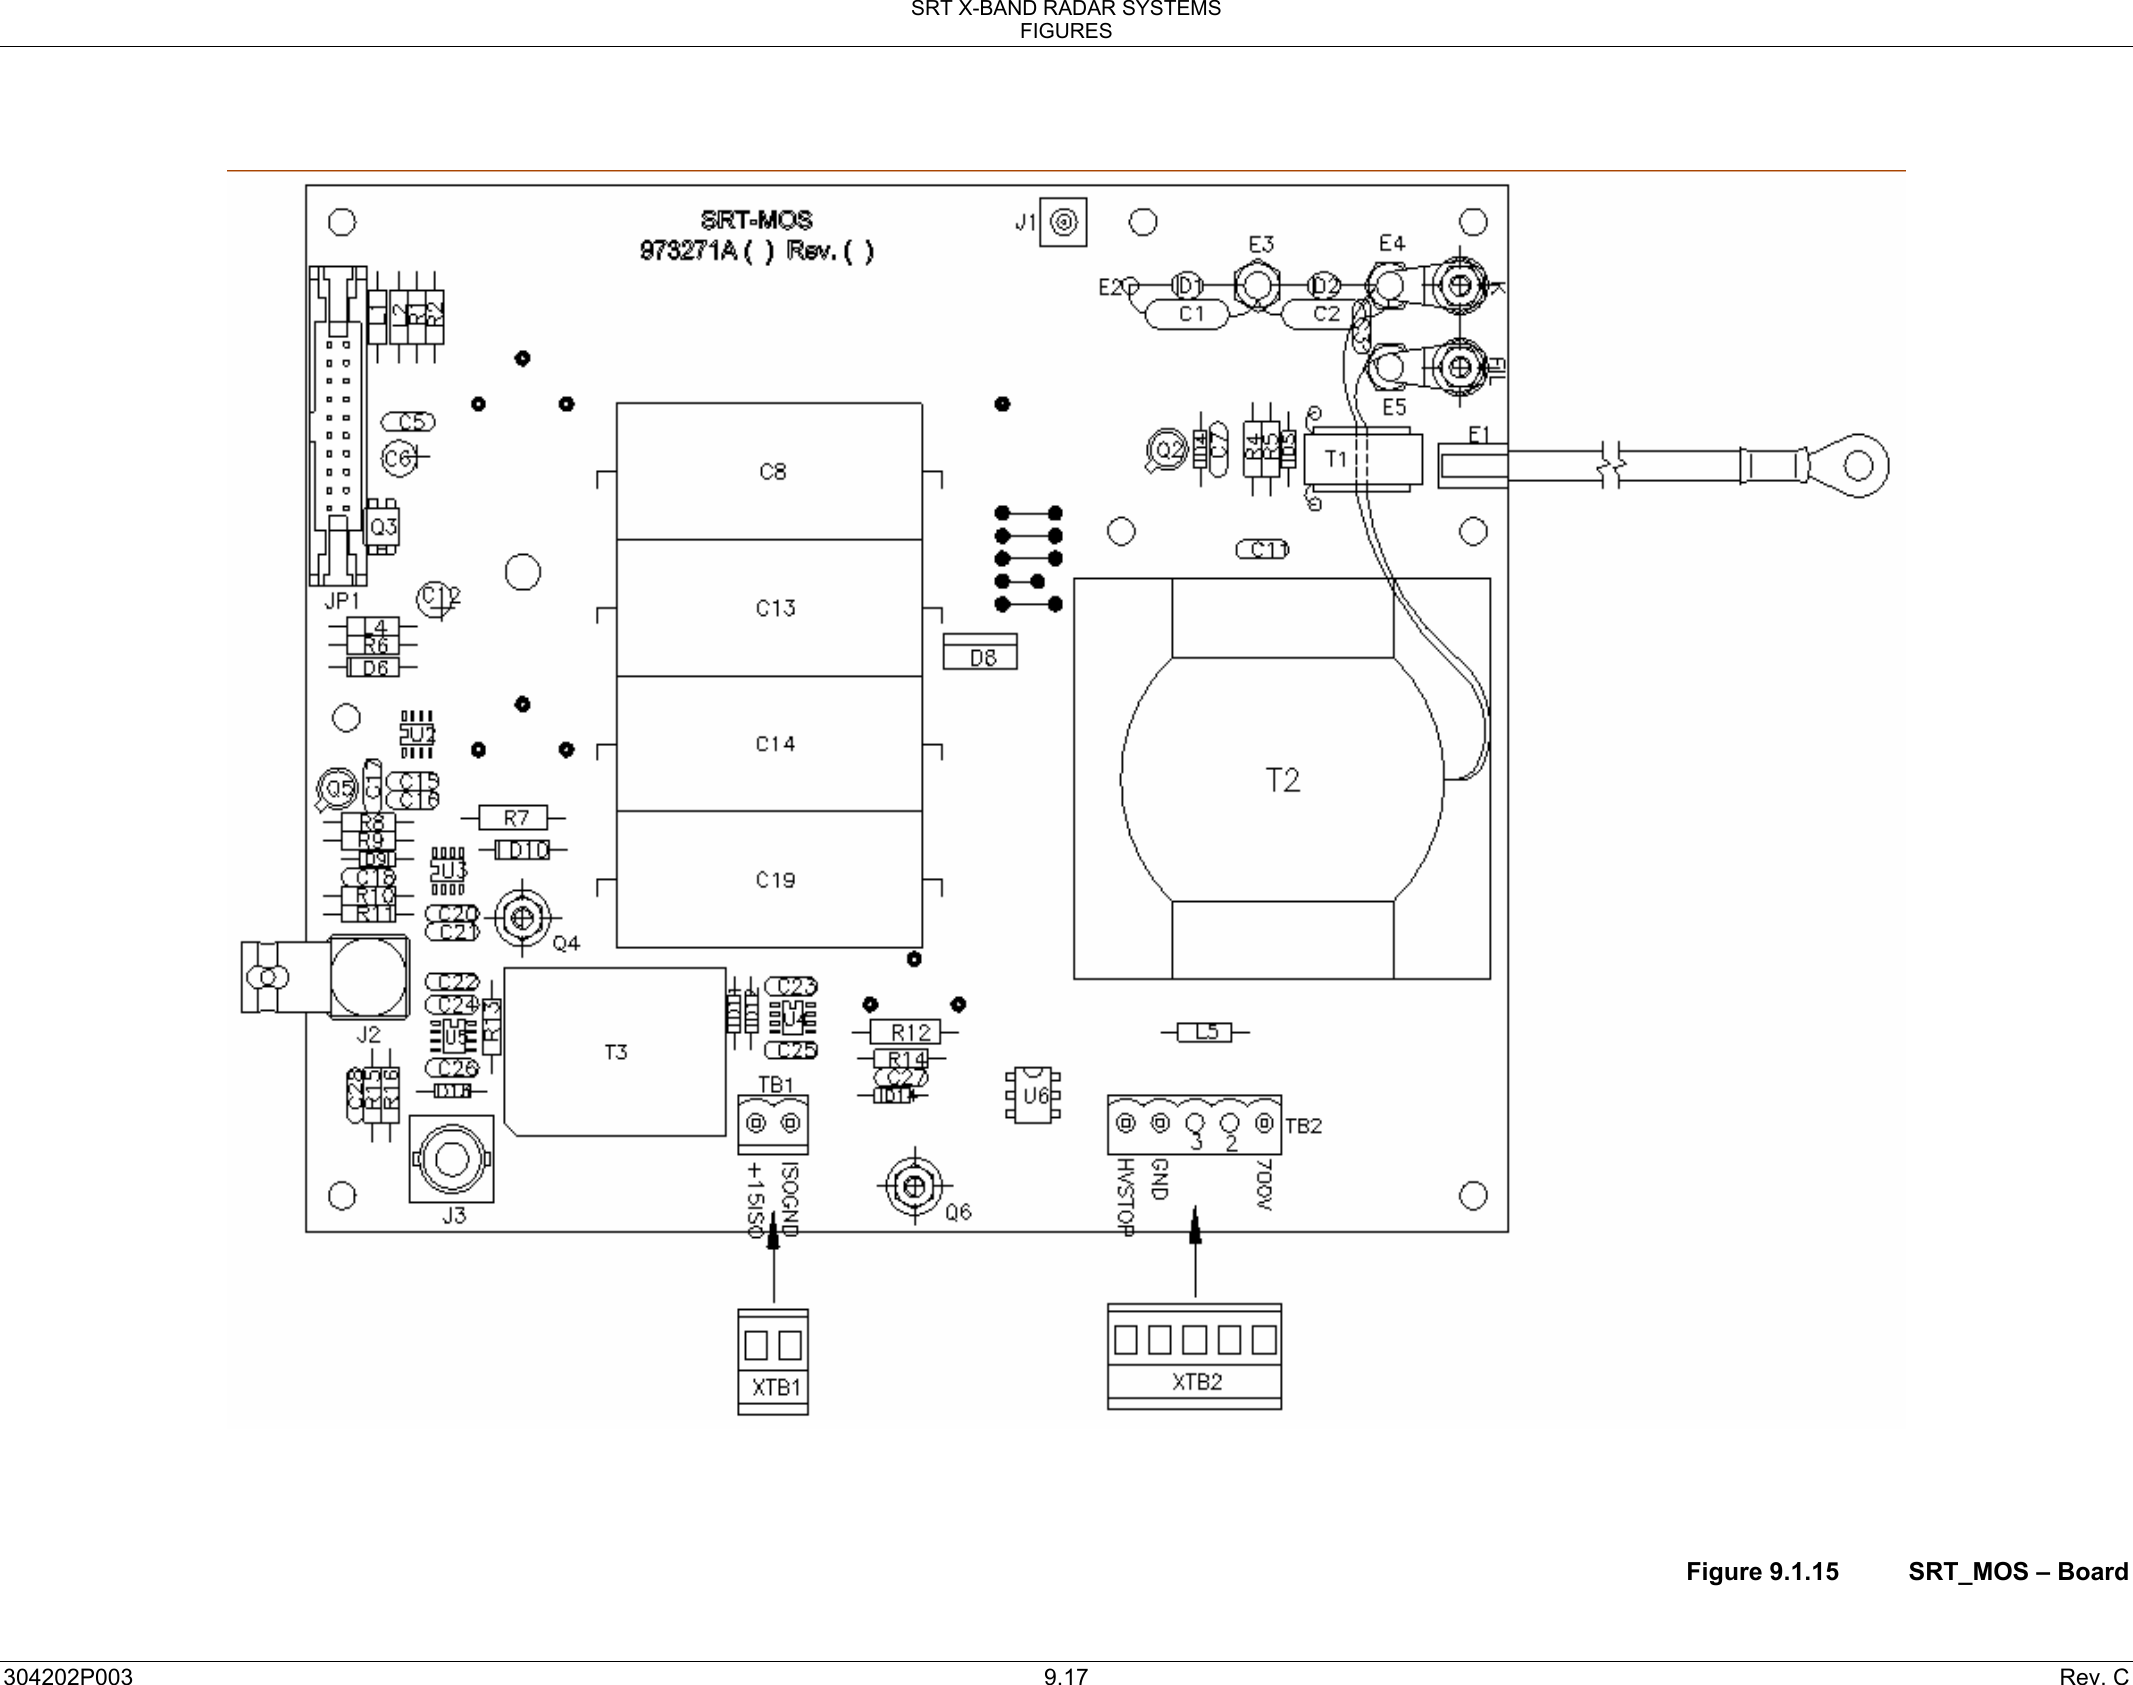 SRT X-BAND RADAR SYSTEMS FIGURES 304202P003  9.17  Rev. C         Figure 9.1.15  SRT_MOS – Board 